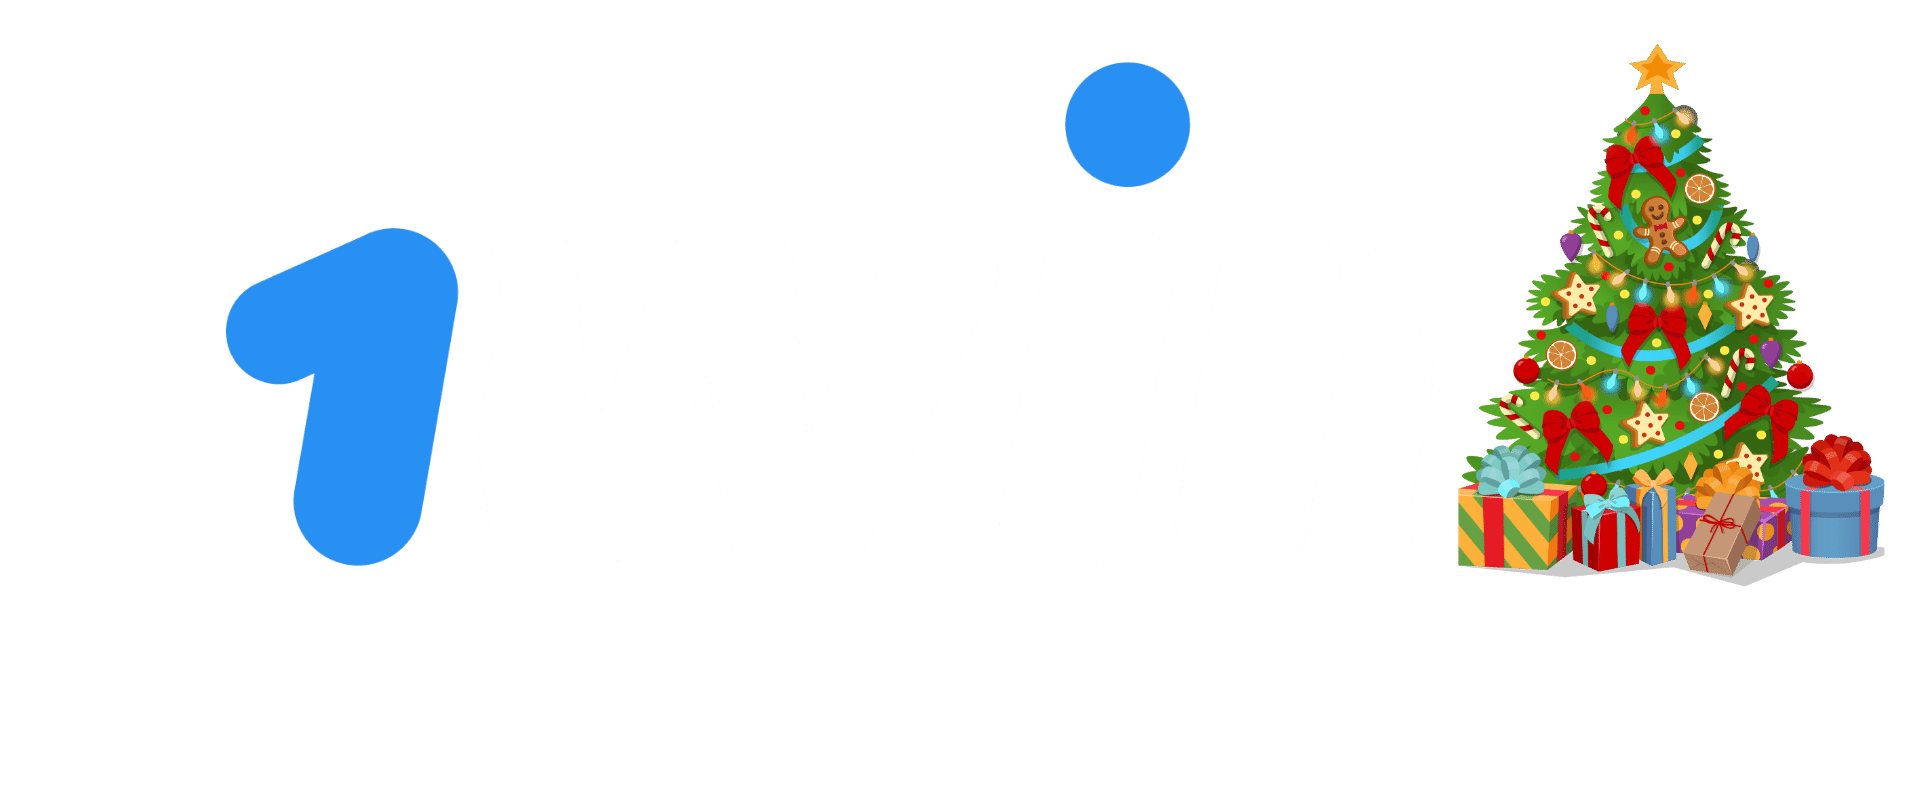 1win.org.kz